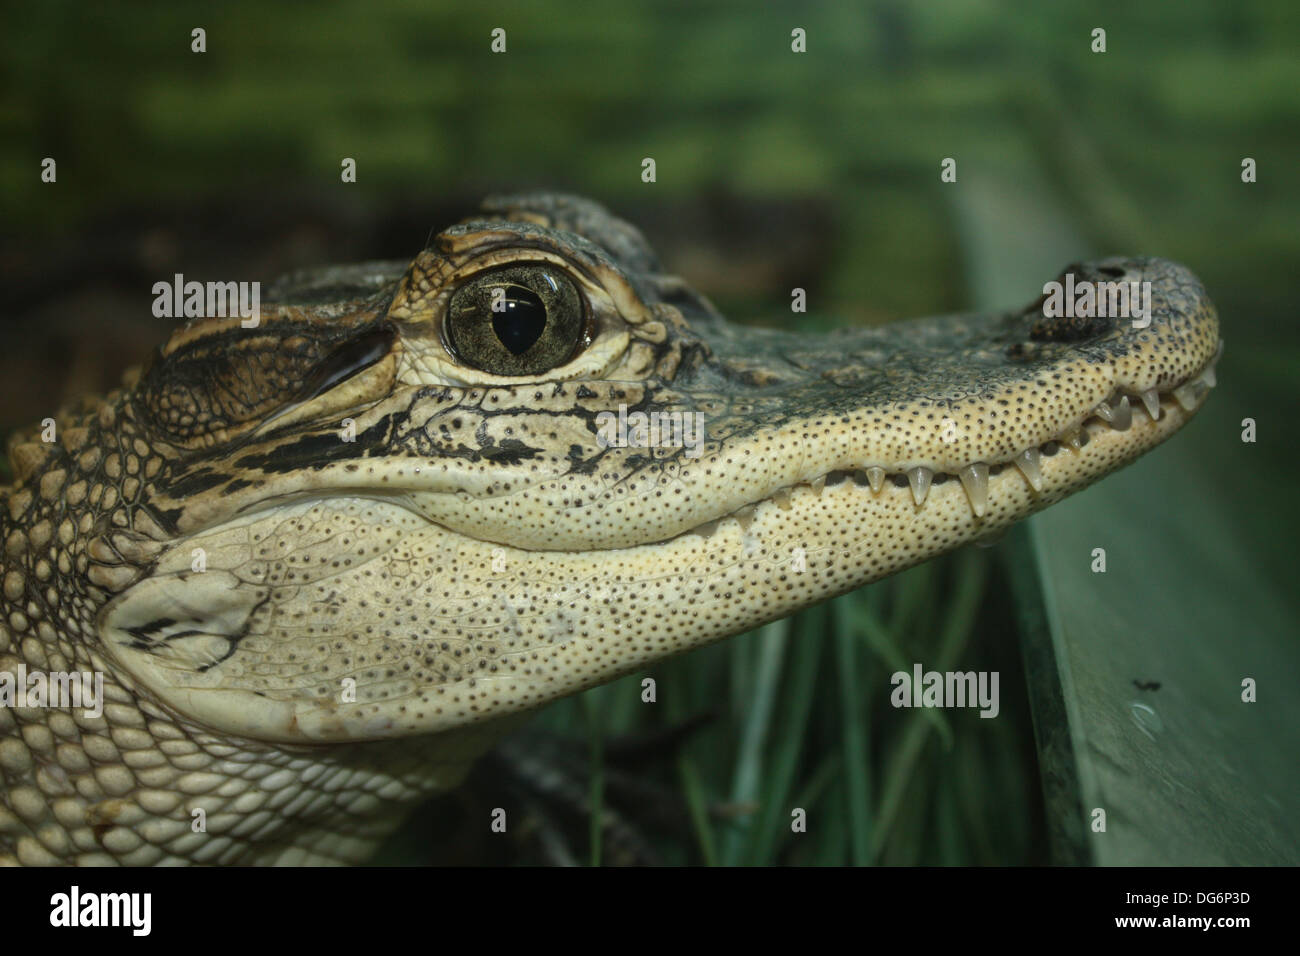 Baby alligator Stock Photo